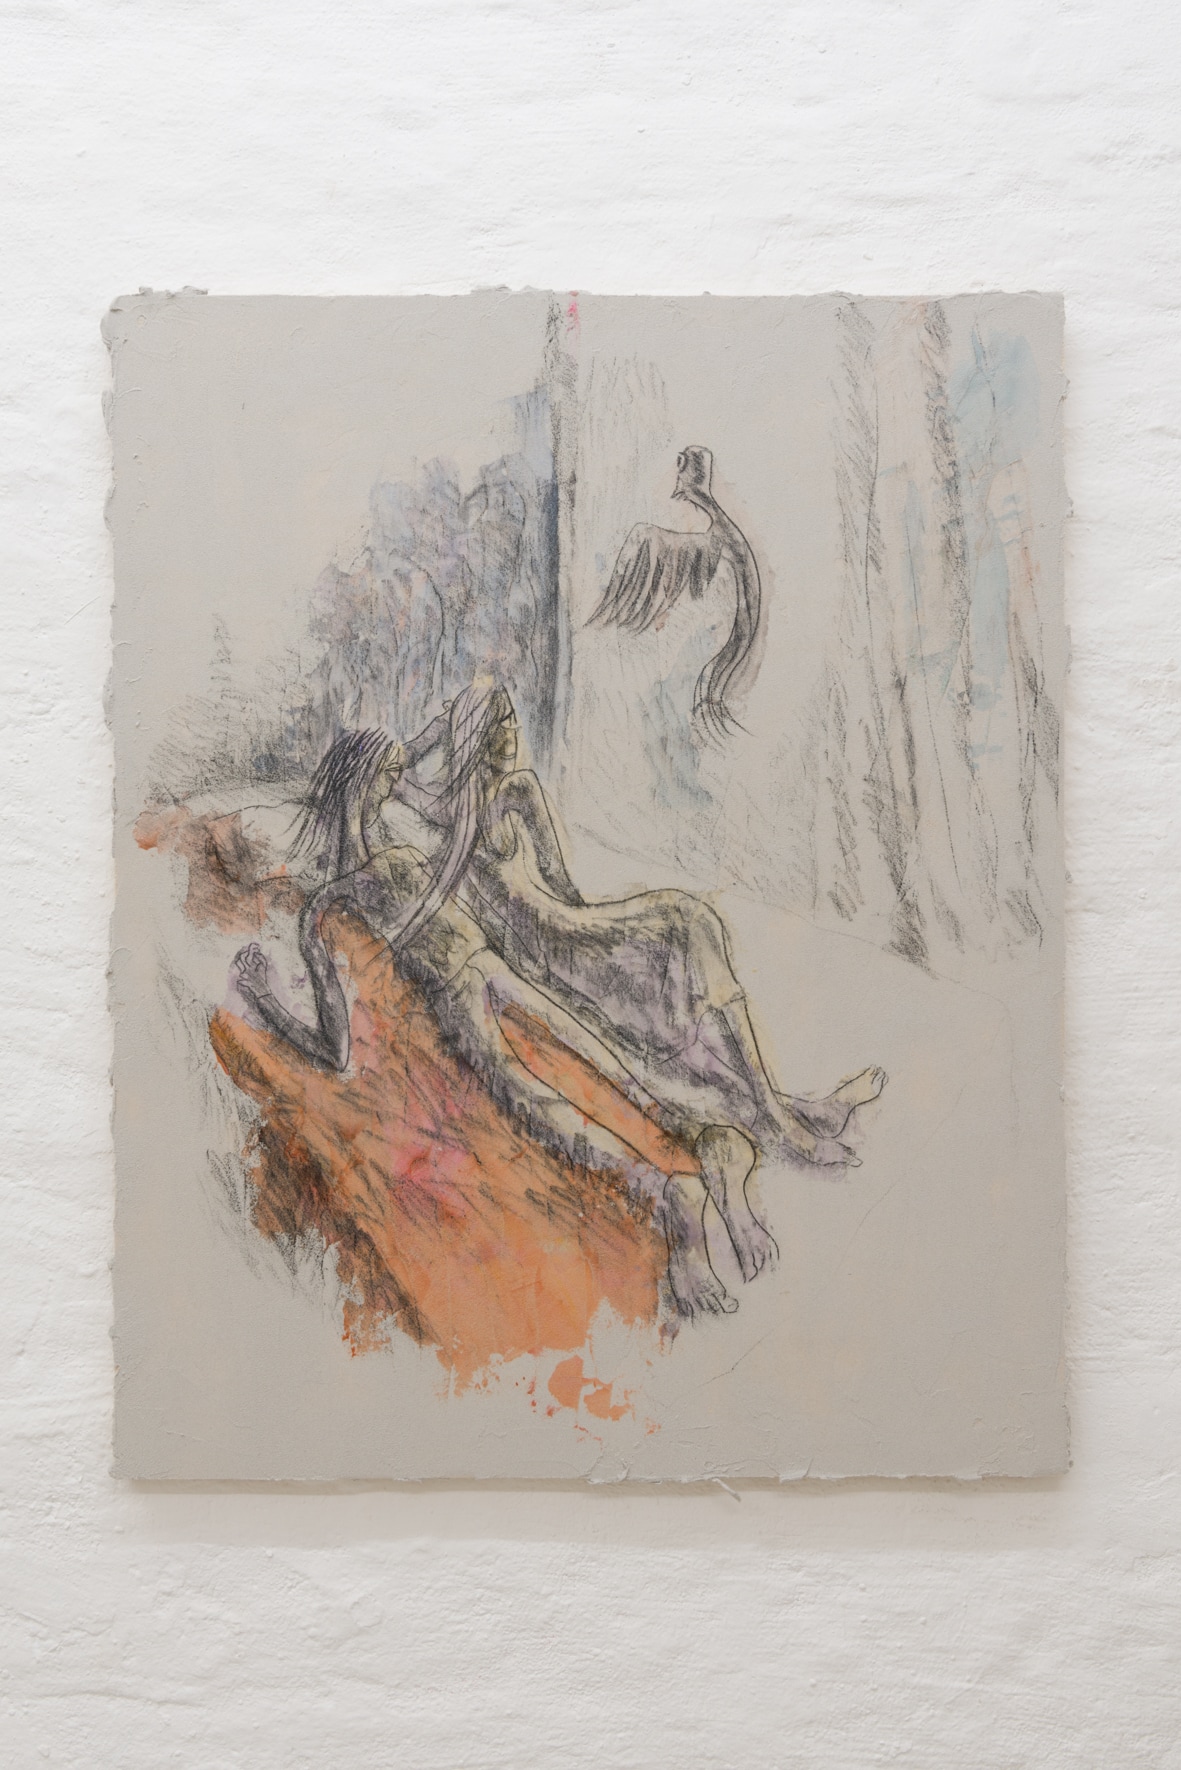 Emi Mizukami, humming bird, still alive, Acrylic and graphite on canvas, 100 x 80.5 cm, 2020